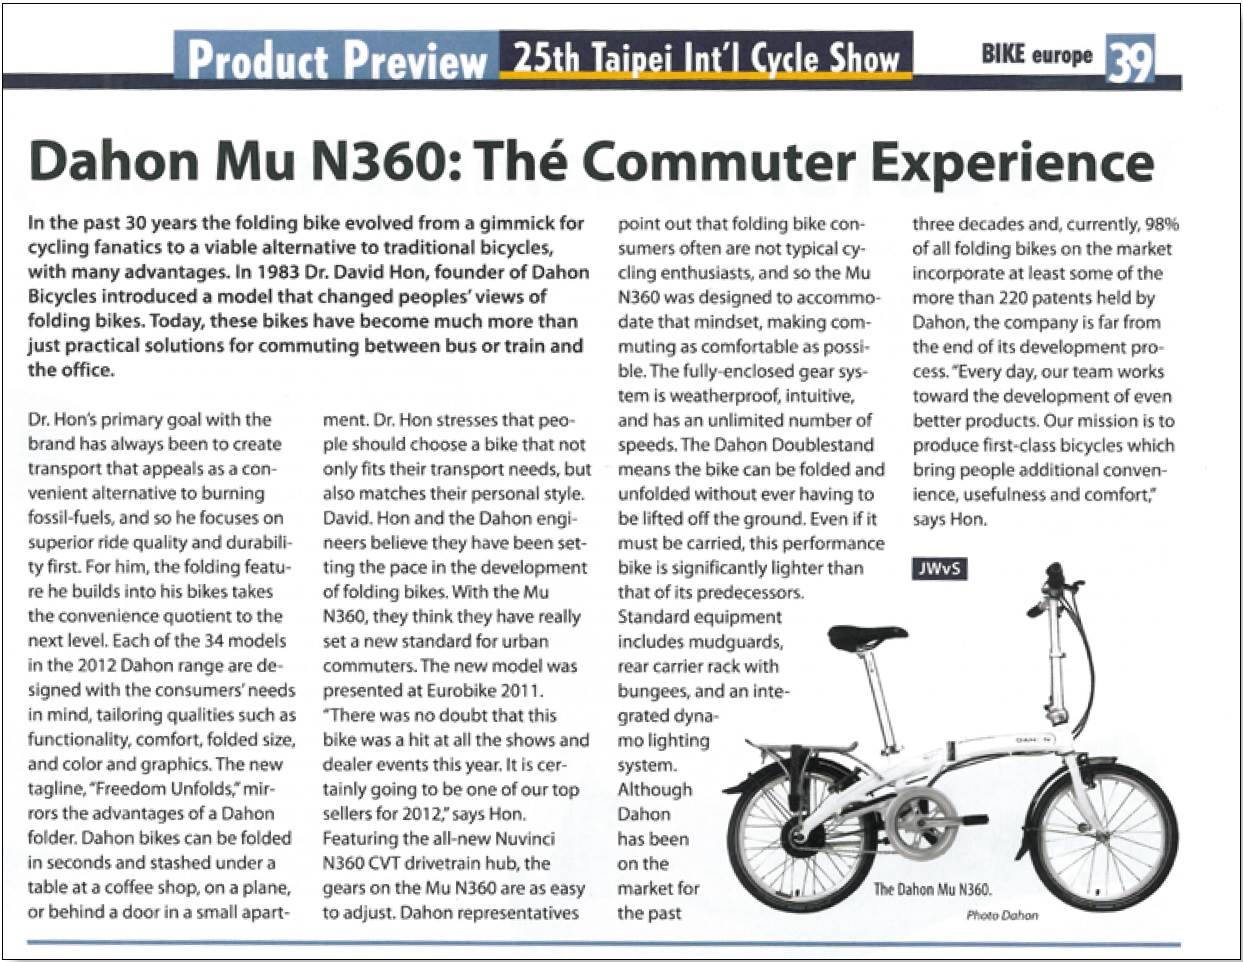 Dahon Mu N360: The Commuter Experience